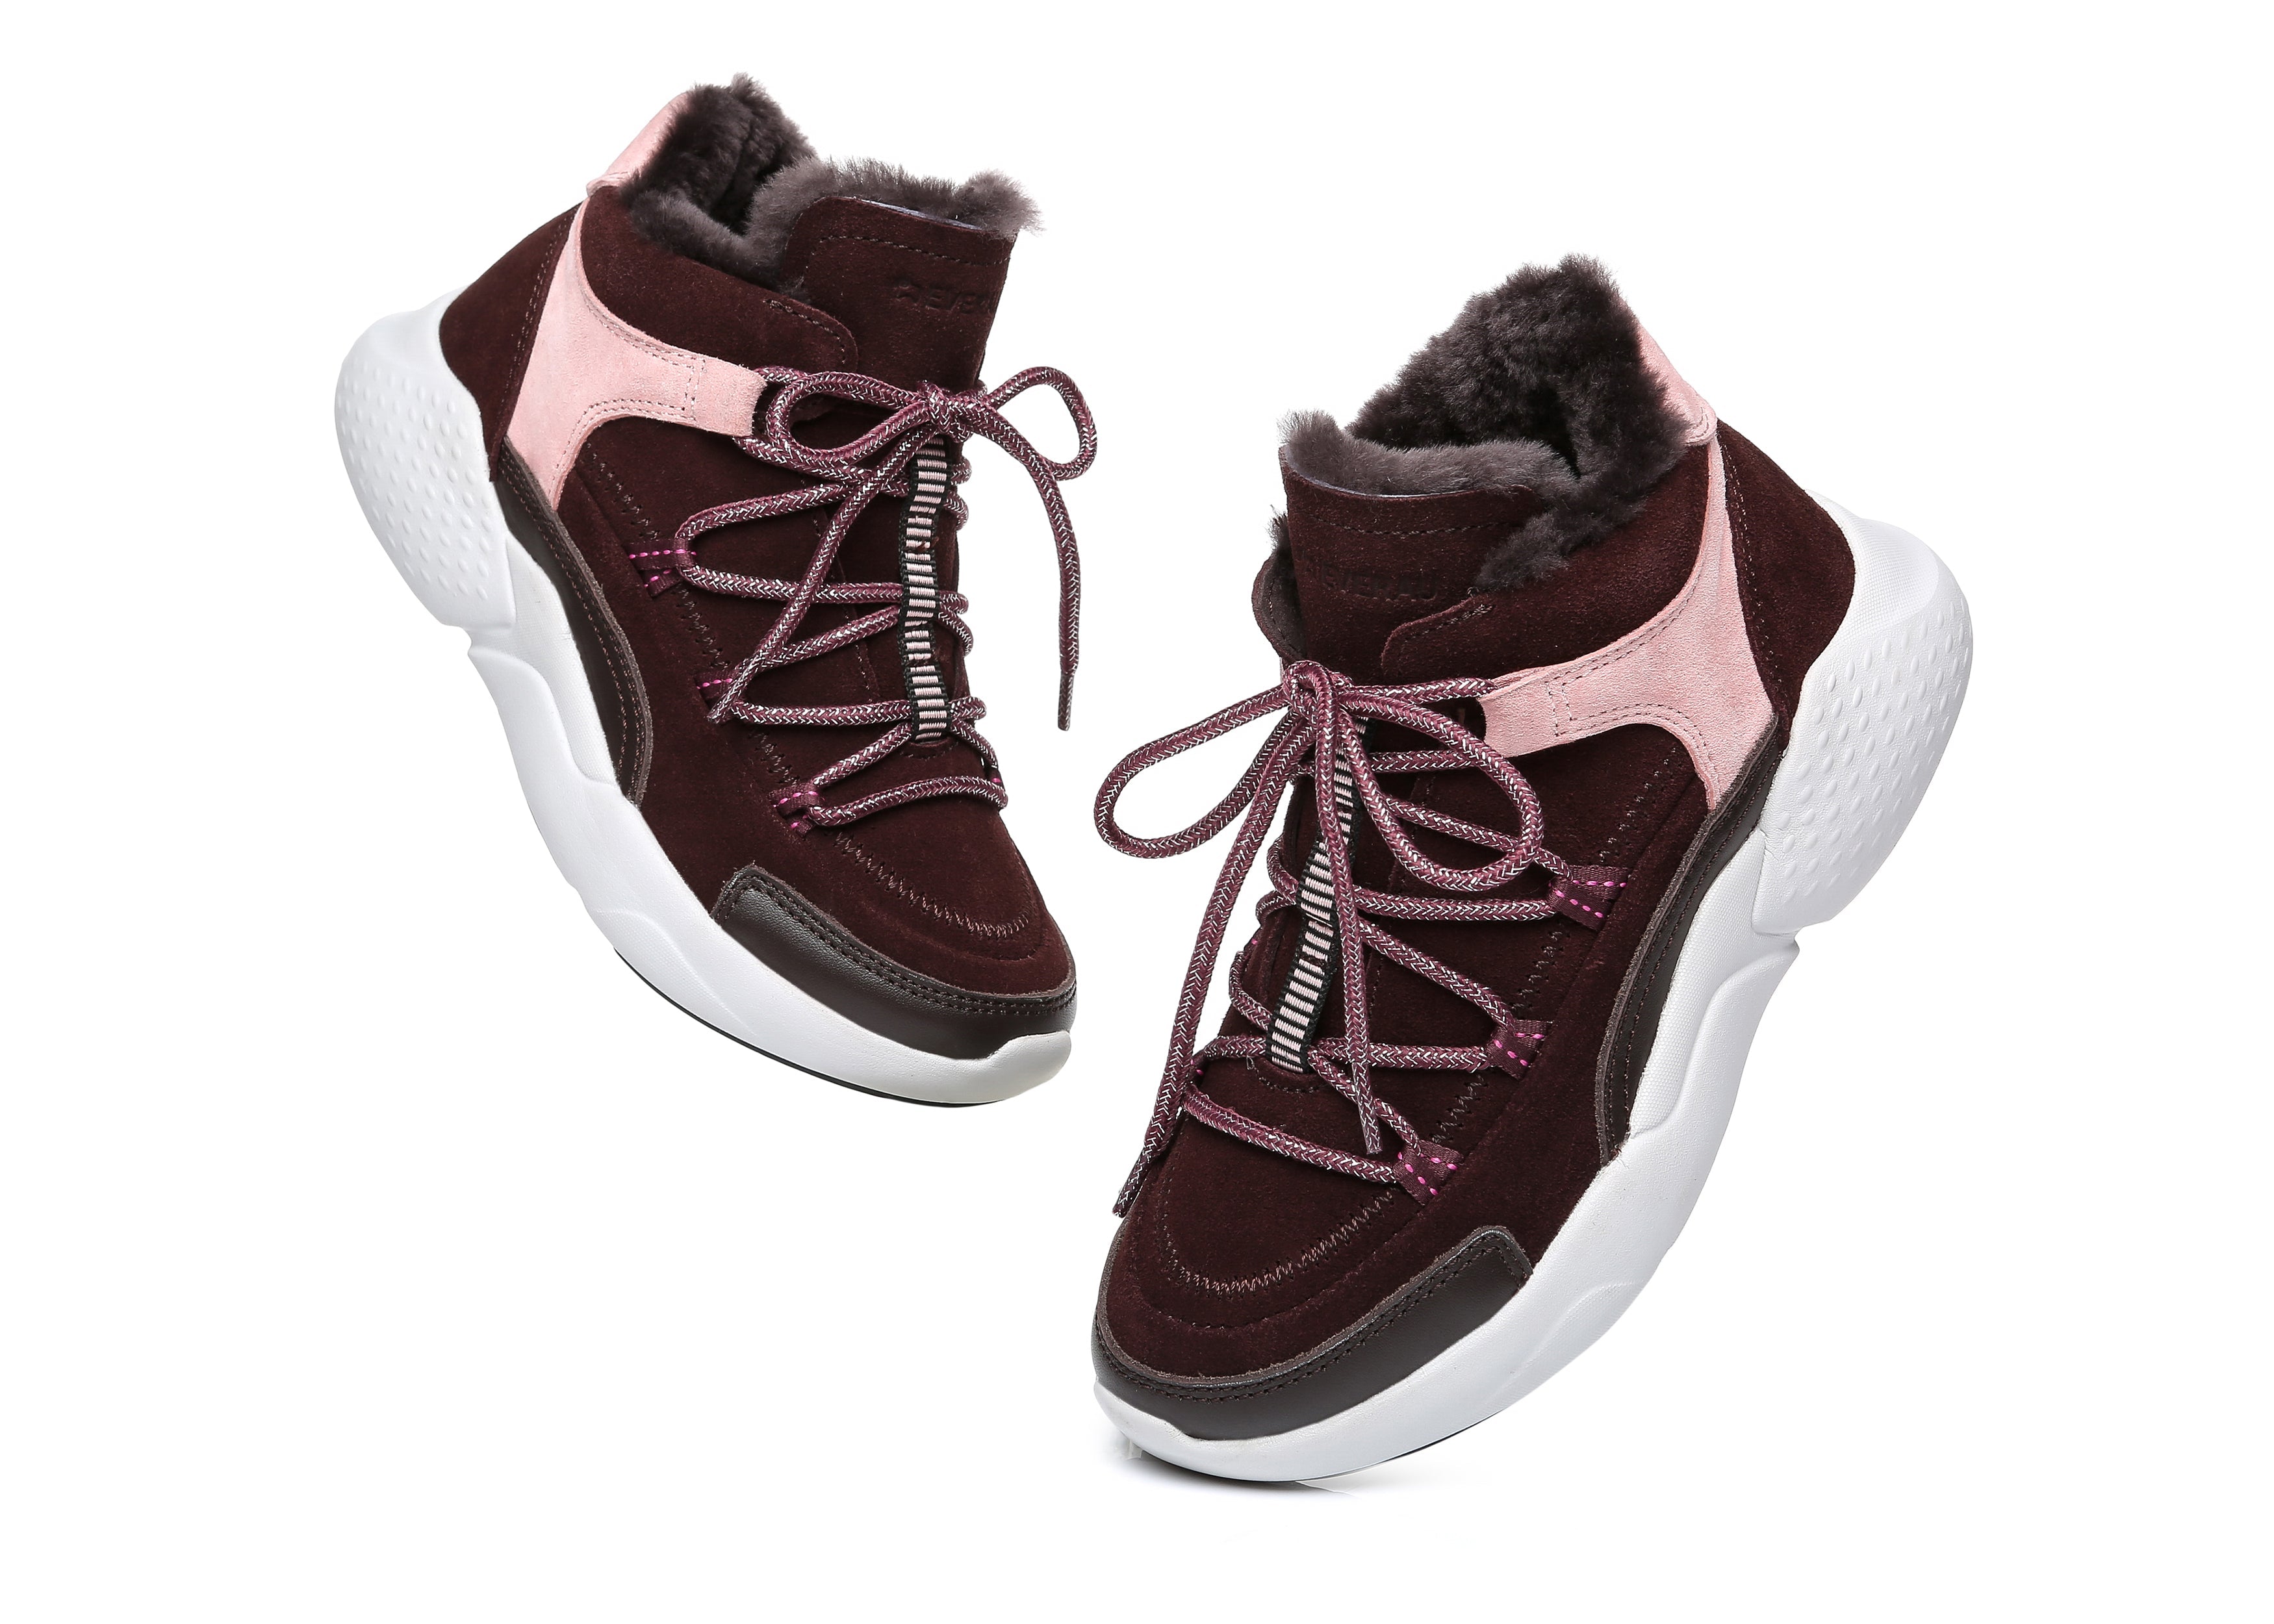 EVERAU® Sheepskin Lace-Up Sneakers Women Pink Jelly